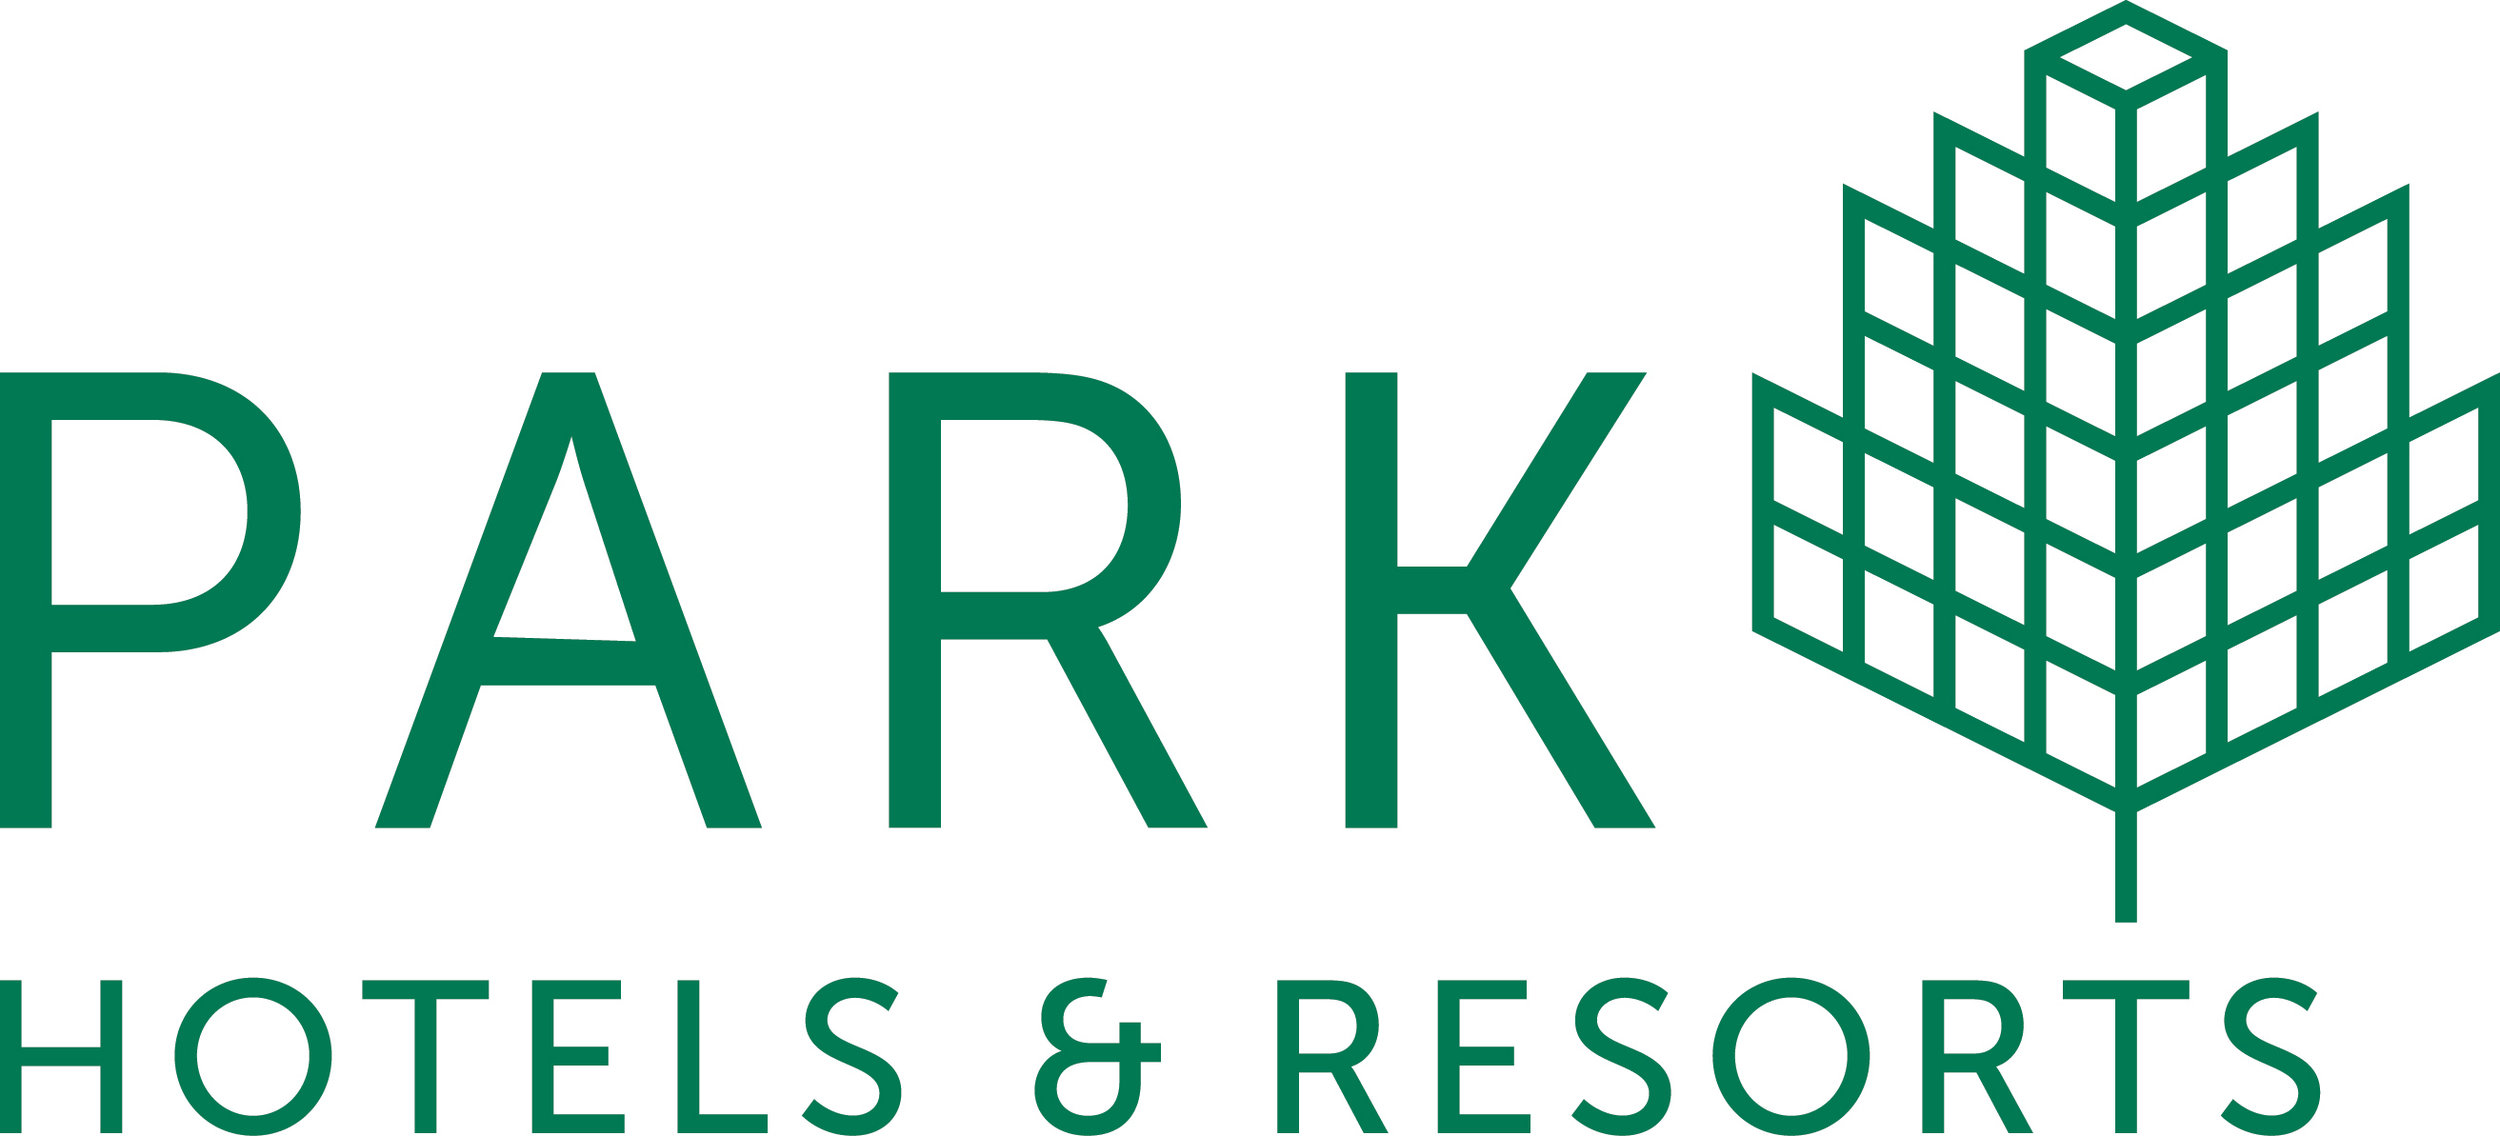 Park_Hotels_and resorts_logo.jpg